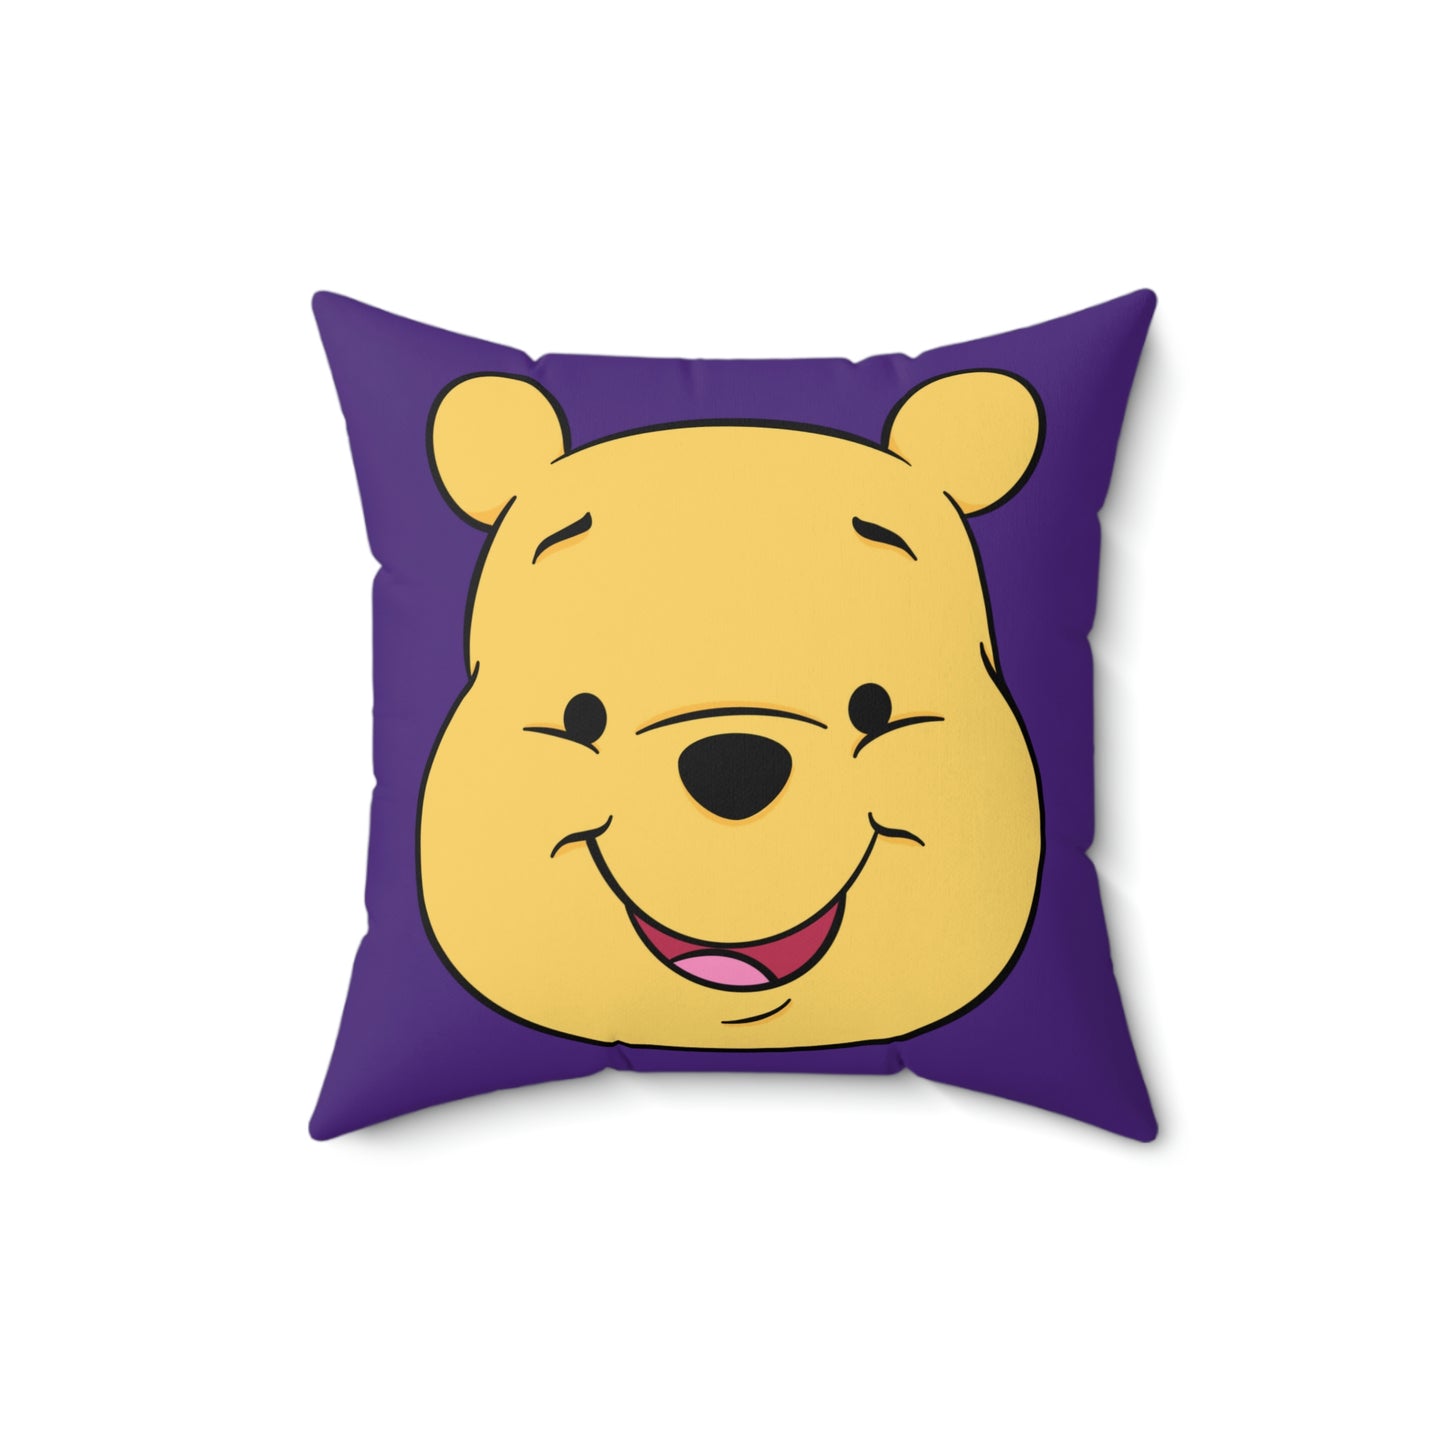 Spun Polyester Square Pillow Case “Pooh on Purple”